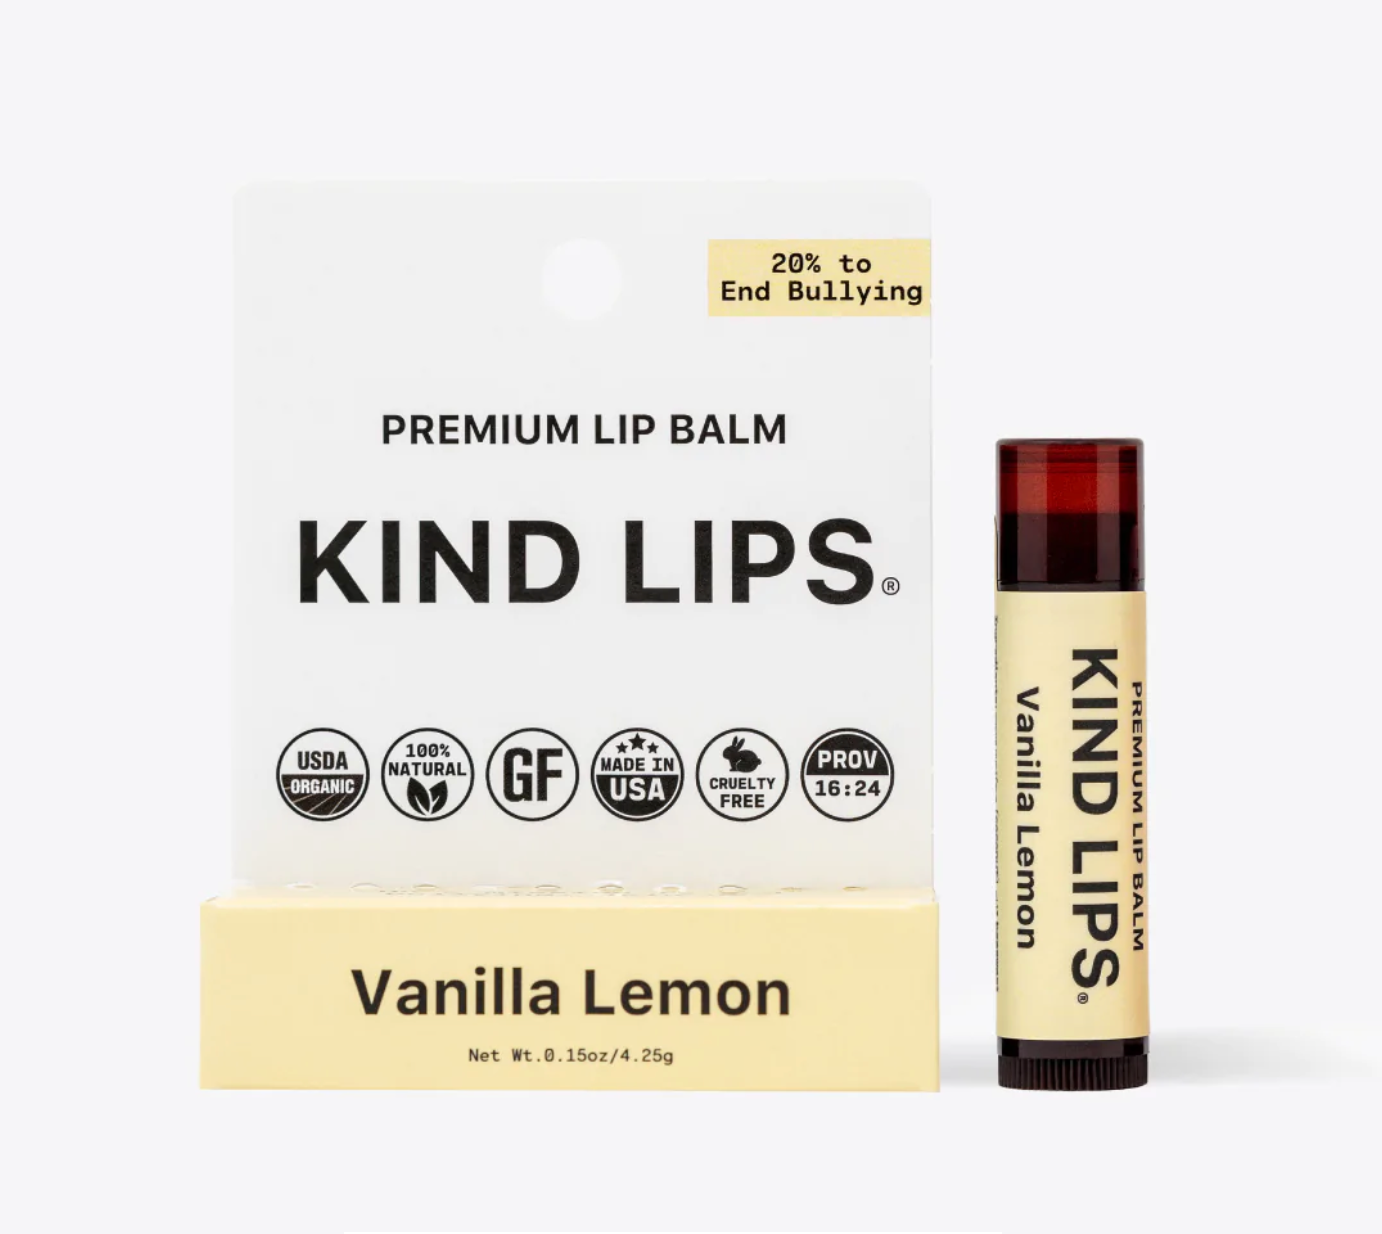 Kind Lips Premium Lip Balm